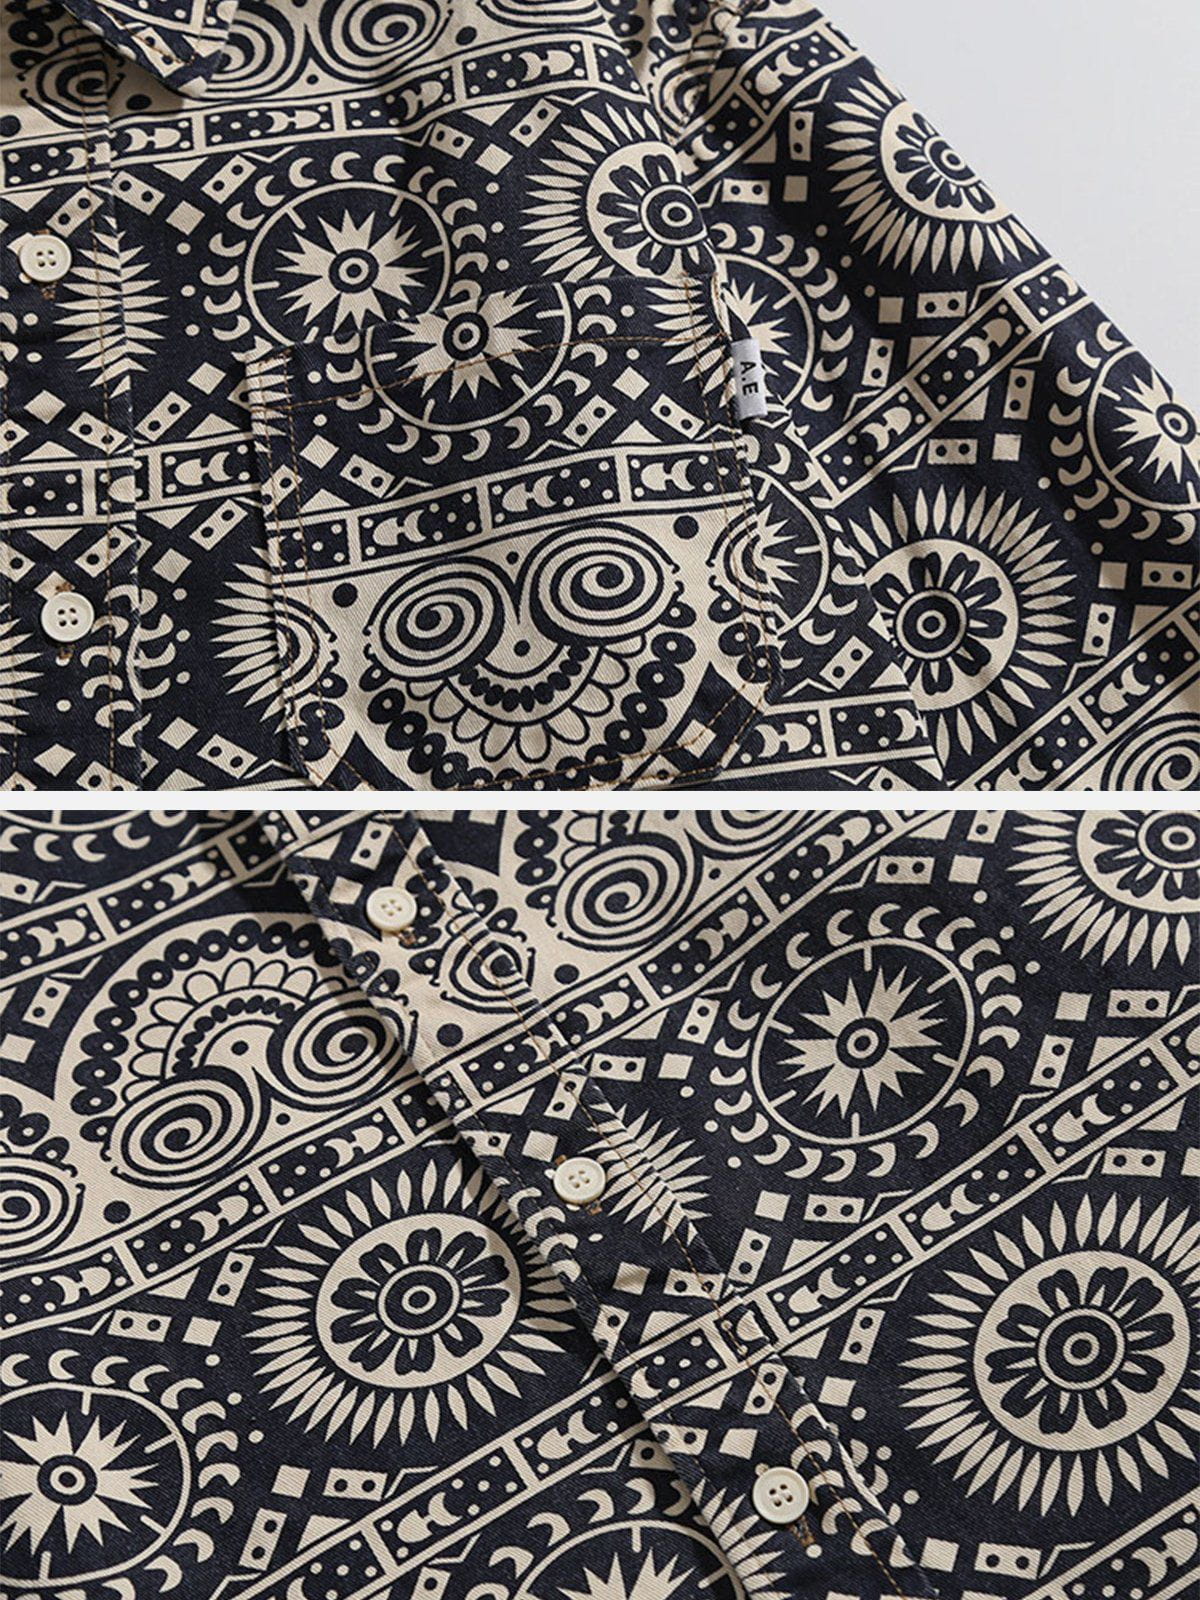 Majesda® - Loose Embroidery Shacket outfit ideas, streetwear fashion - majesda.com